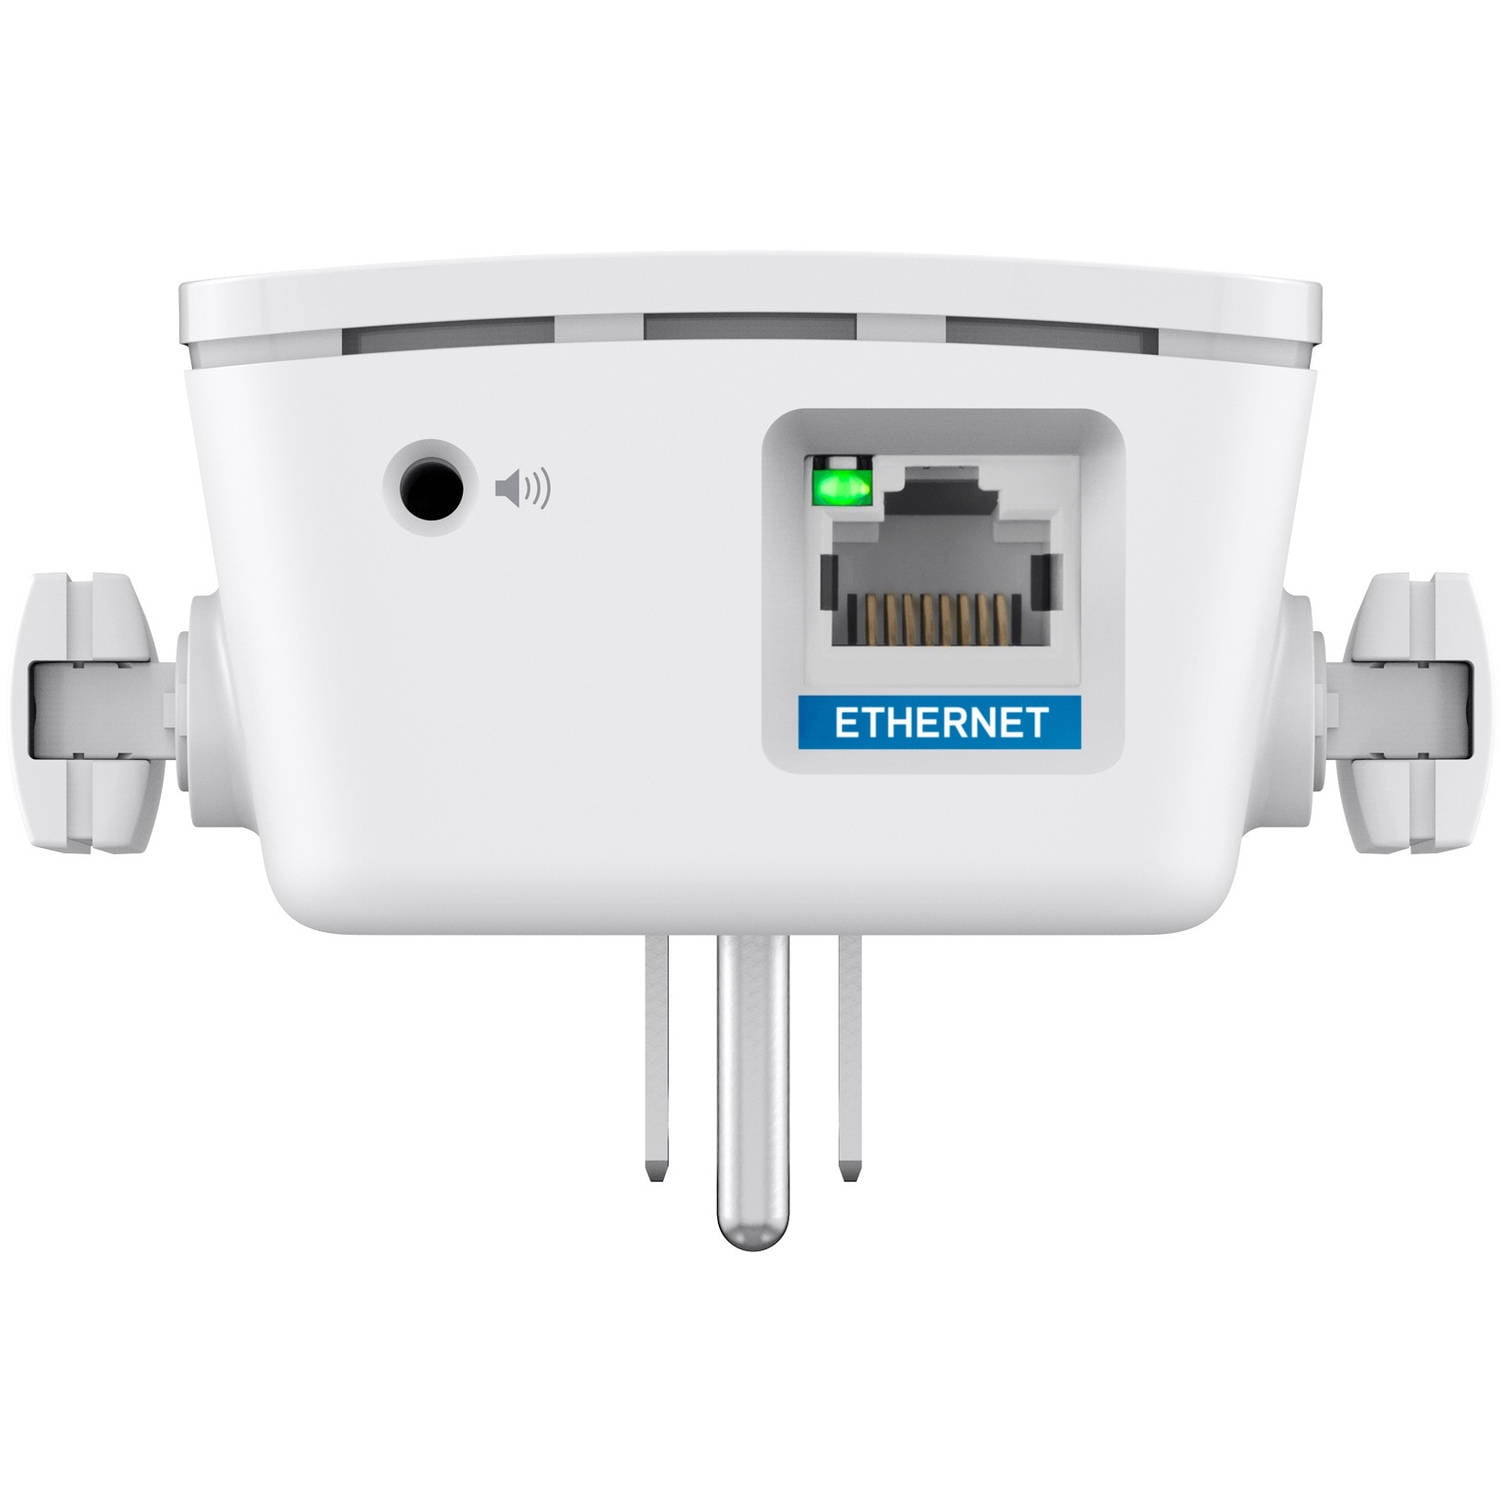 Linksys RE6700 Dual-Band WiFi Range Extender, White -